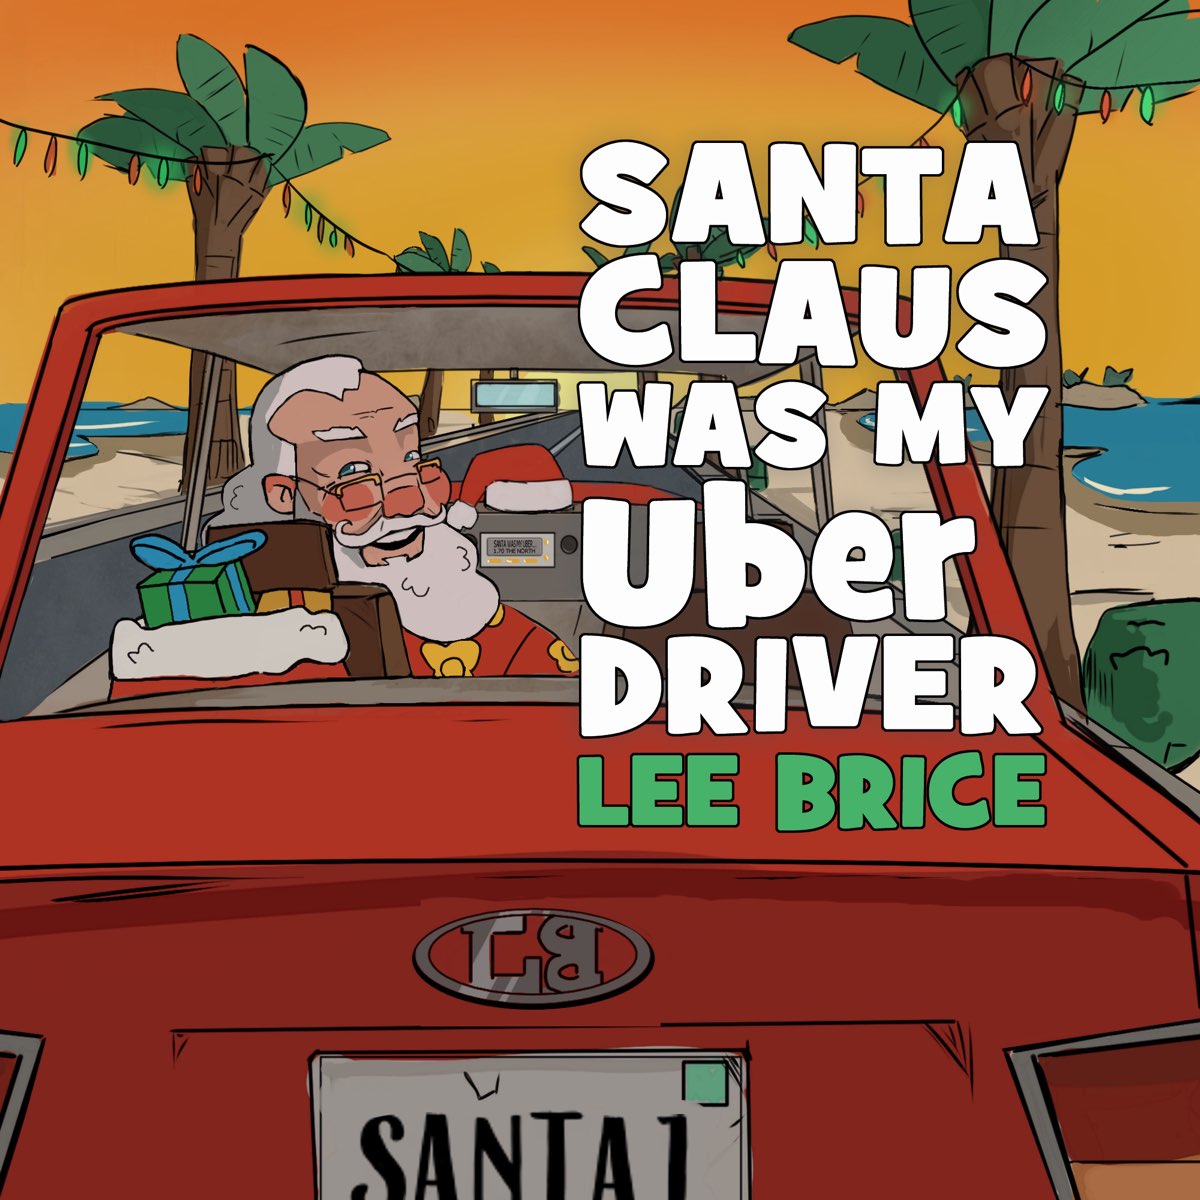 Total 58+ imagen lee brice santa was my uber driver